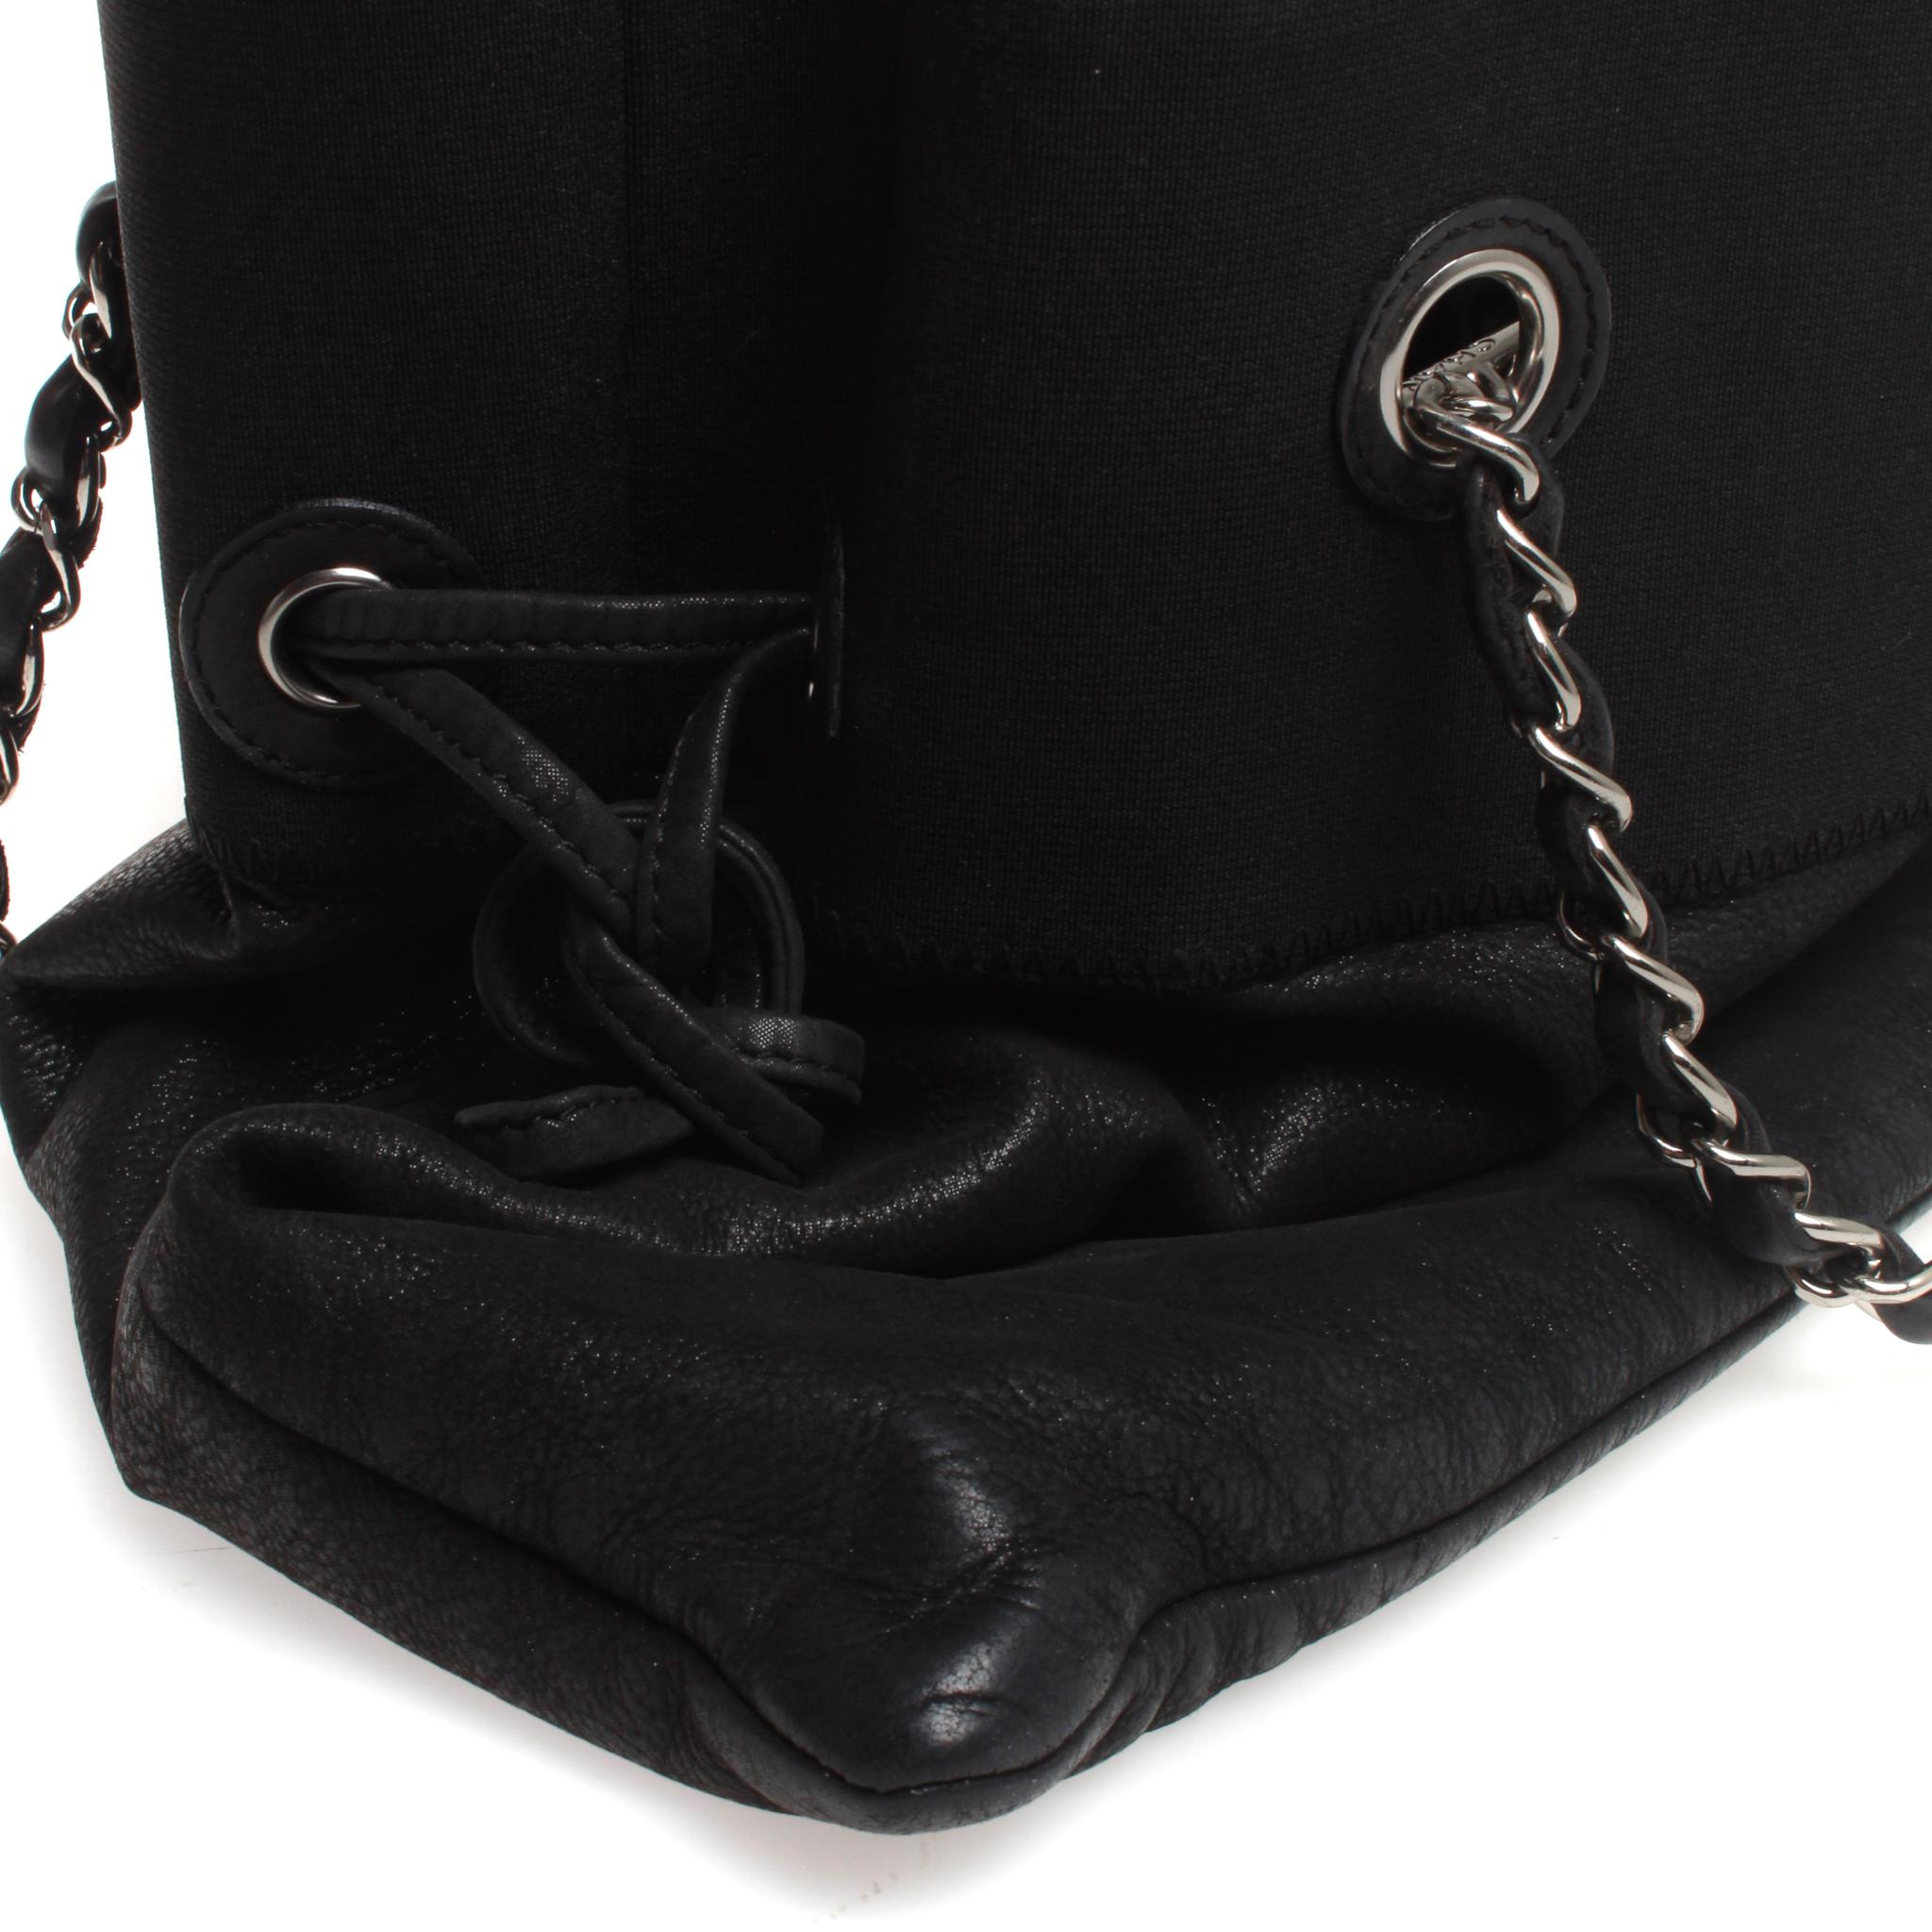 Chanel black handbag 4